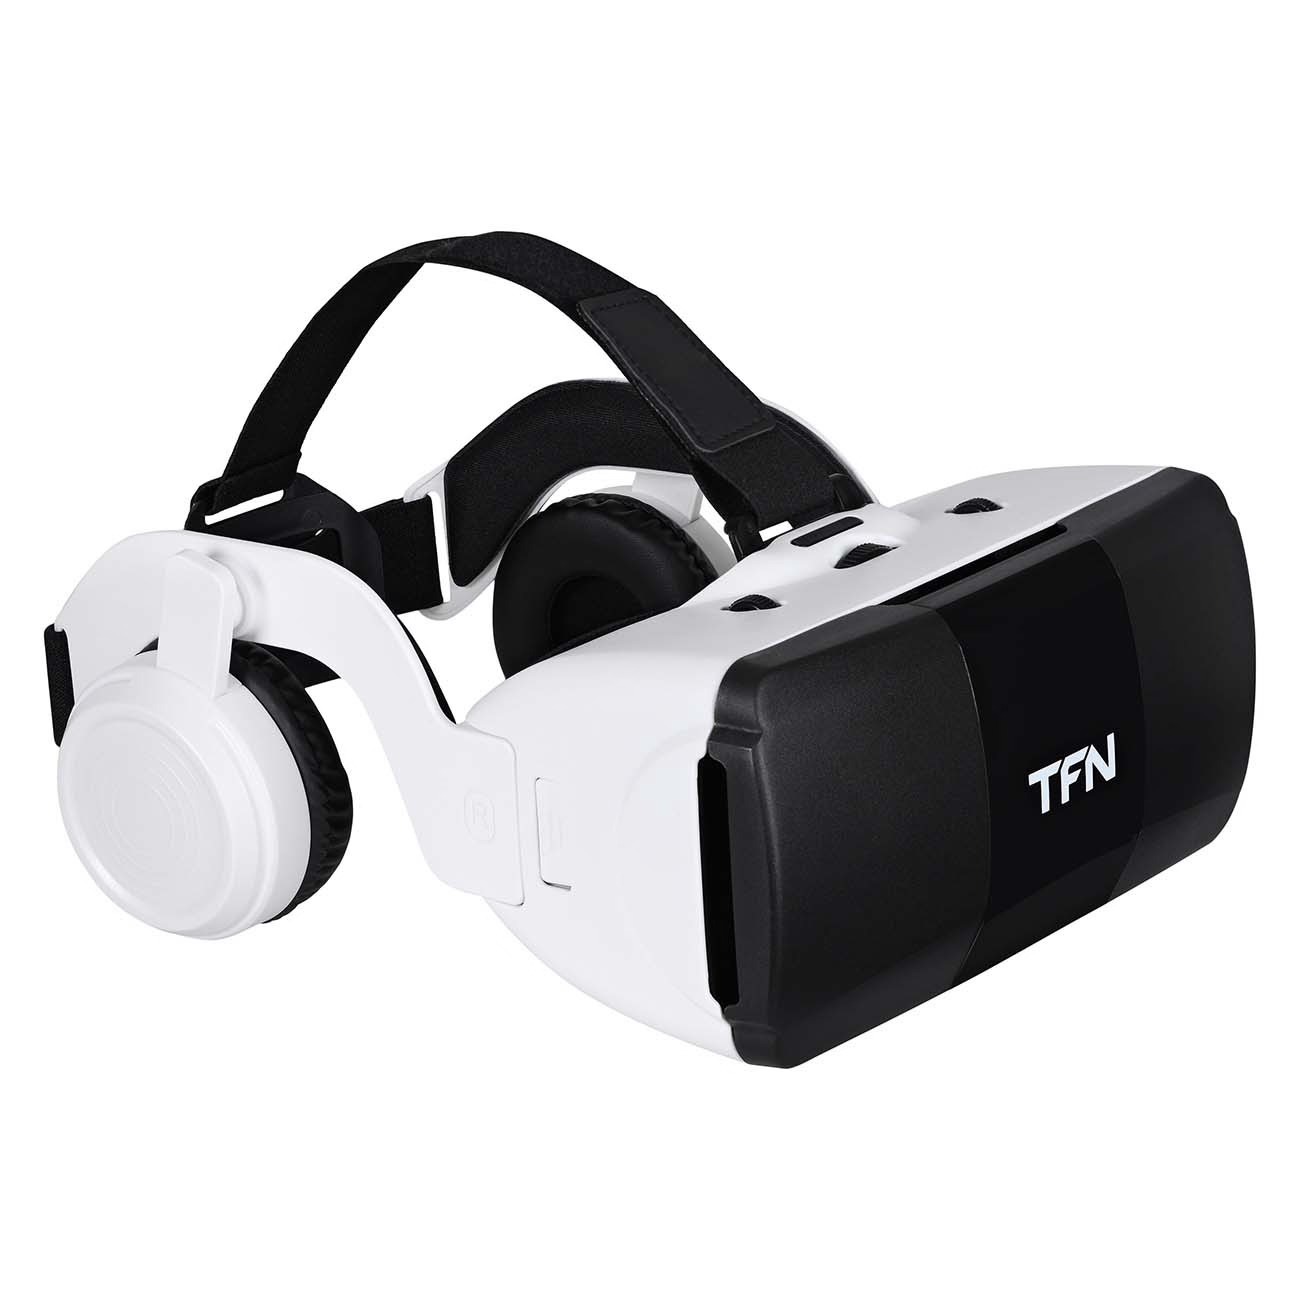 Очки виртуальной реальности Tfn vr beat pro white